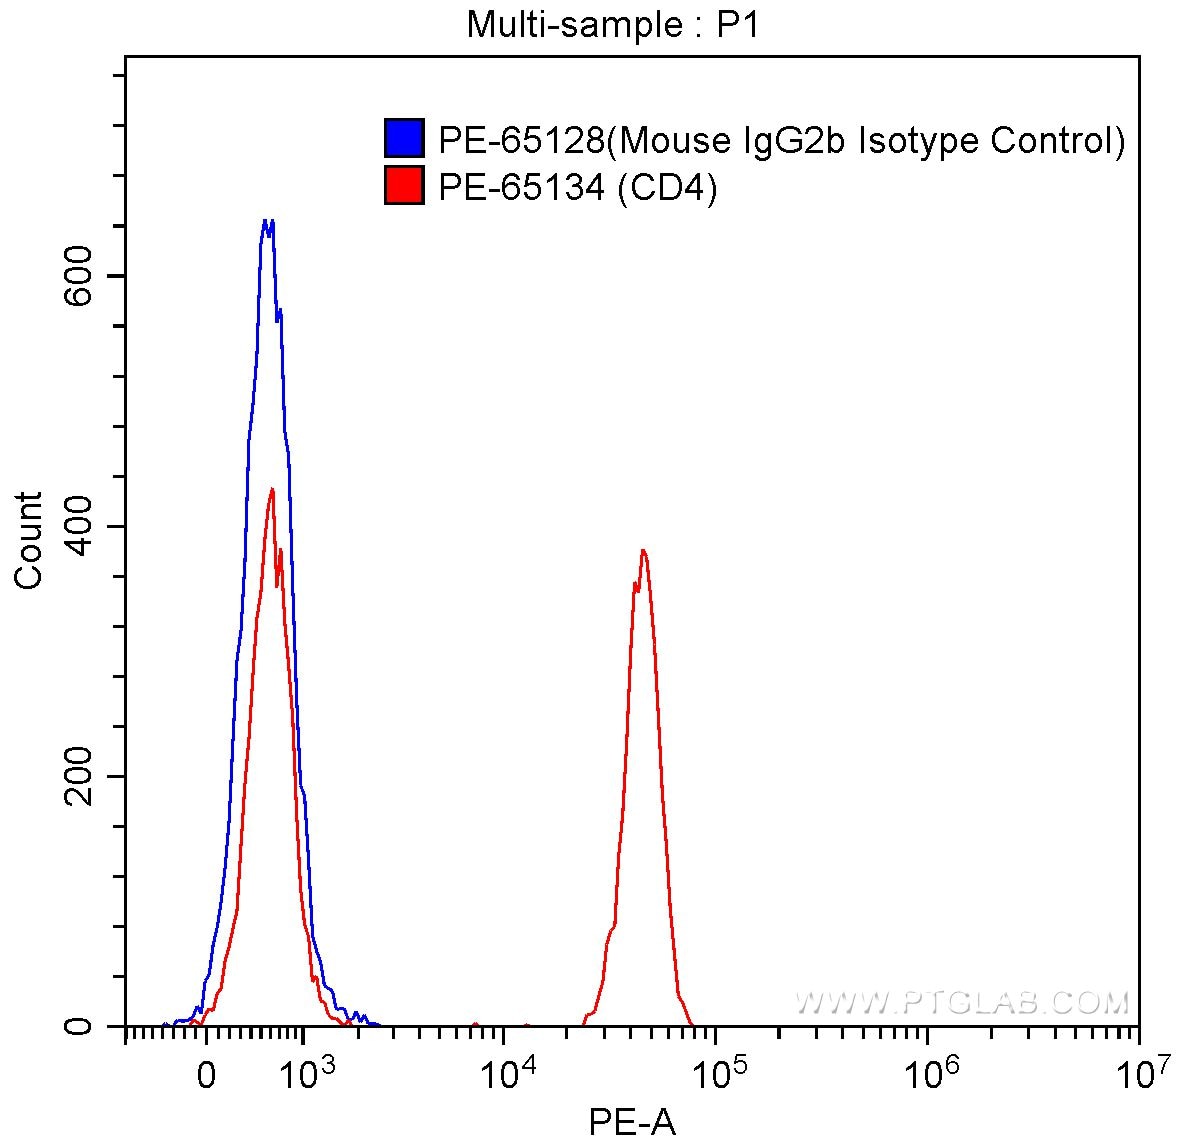 Flow cytometry (FC) experiment of human peripheral blood lymphocytes using PE Anti-Human CD4 (OKT4) (PE-65134)